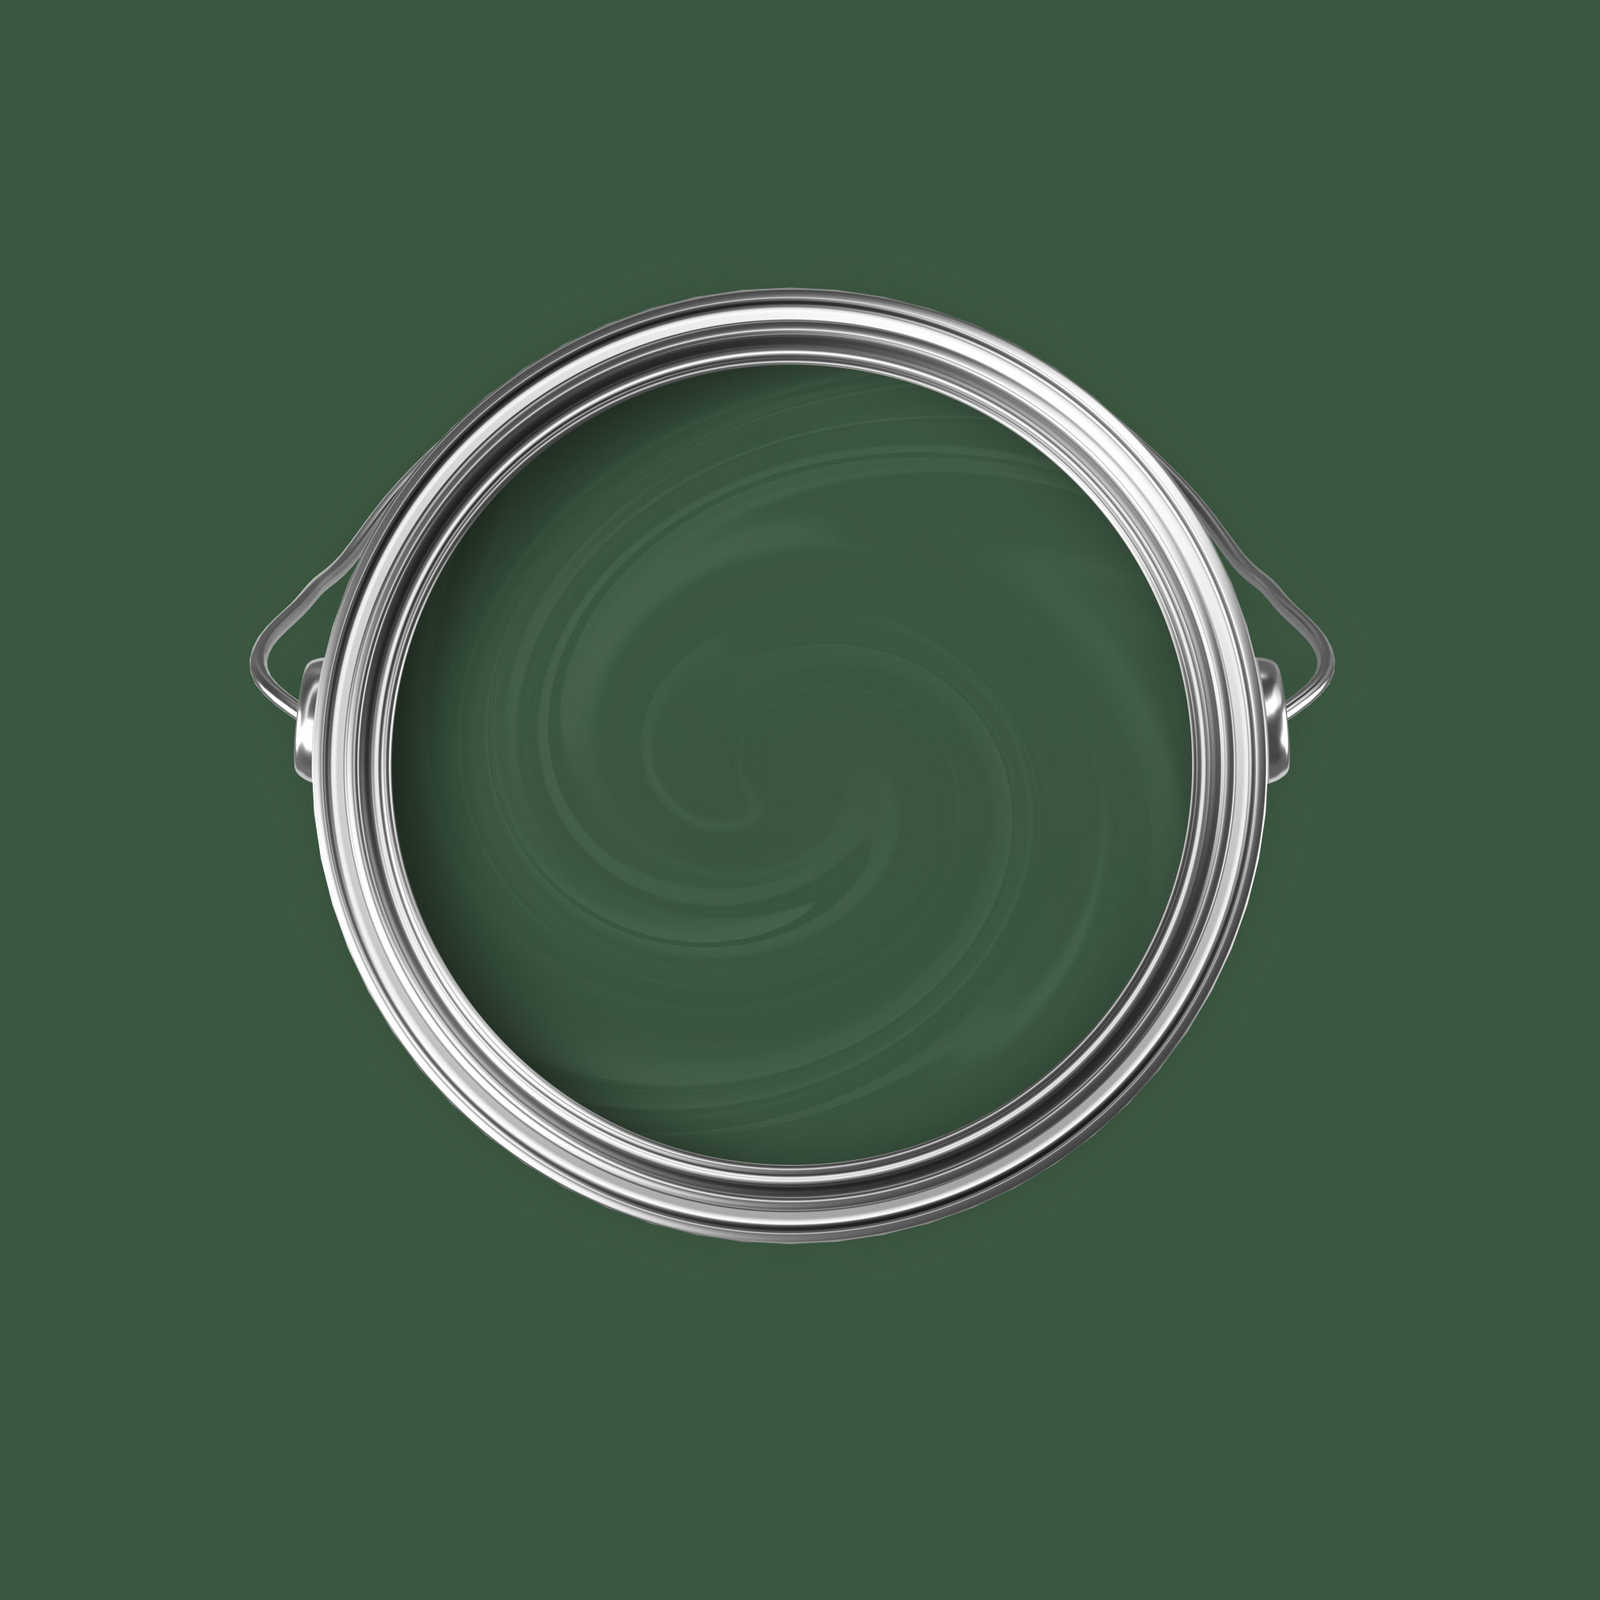             Premium Muurverf Levendig Mosgroen »Gorgeous Green« NW505 – 5 liter
        